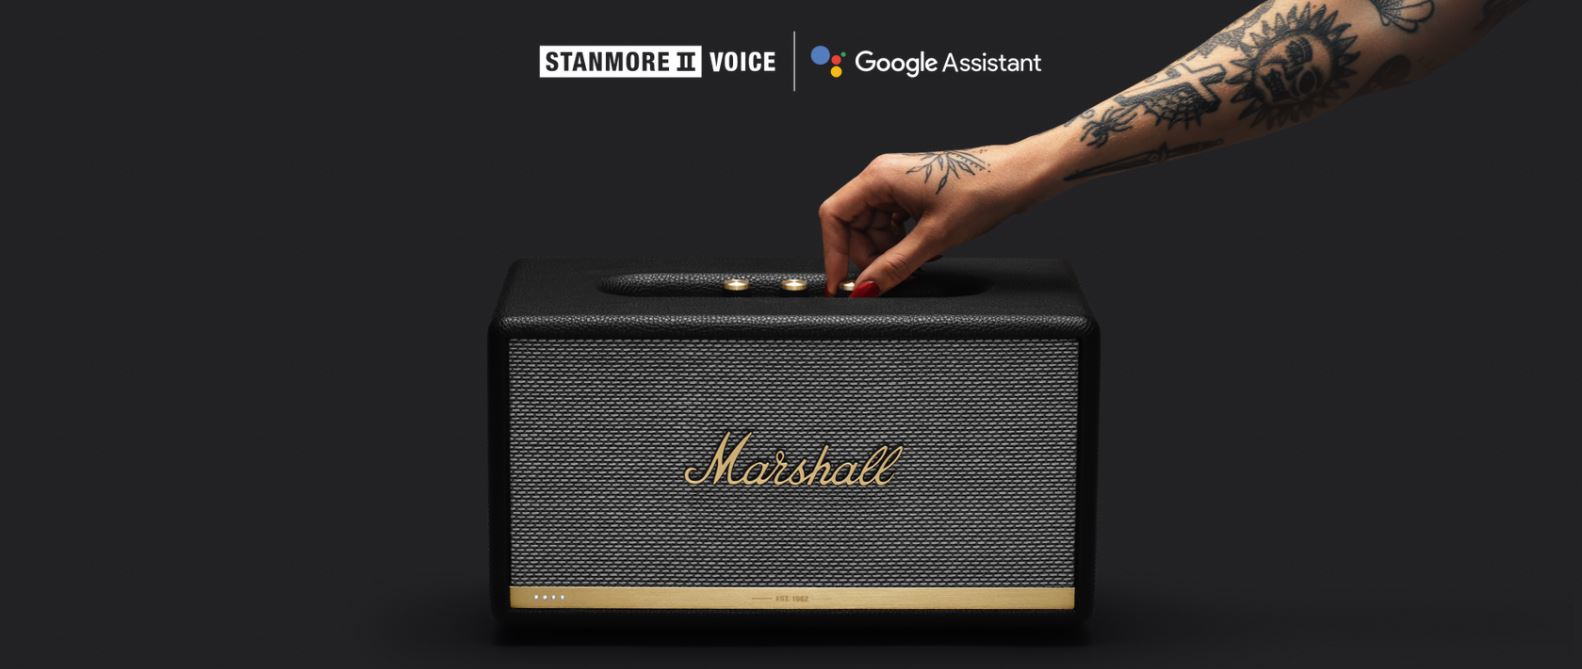 Marshall Stanmore II Voice Bluetooth Speaker,marshall standmore ii voice,standmore ii voice,standmore voice,marshall,marshall speaker,google assistant,wifispeaker